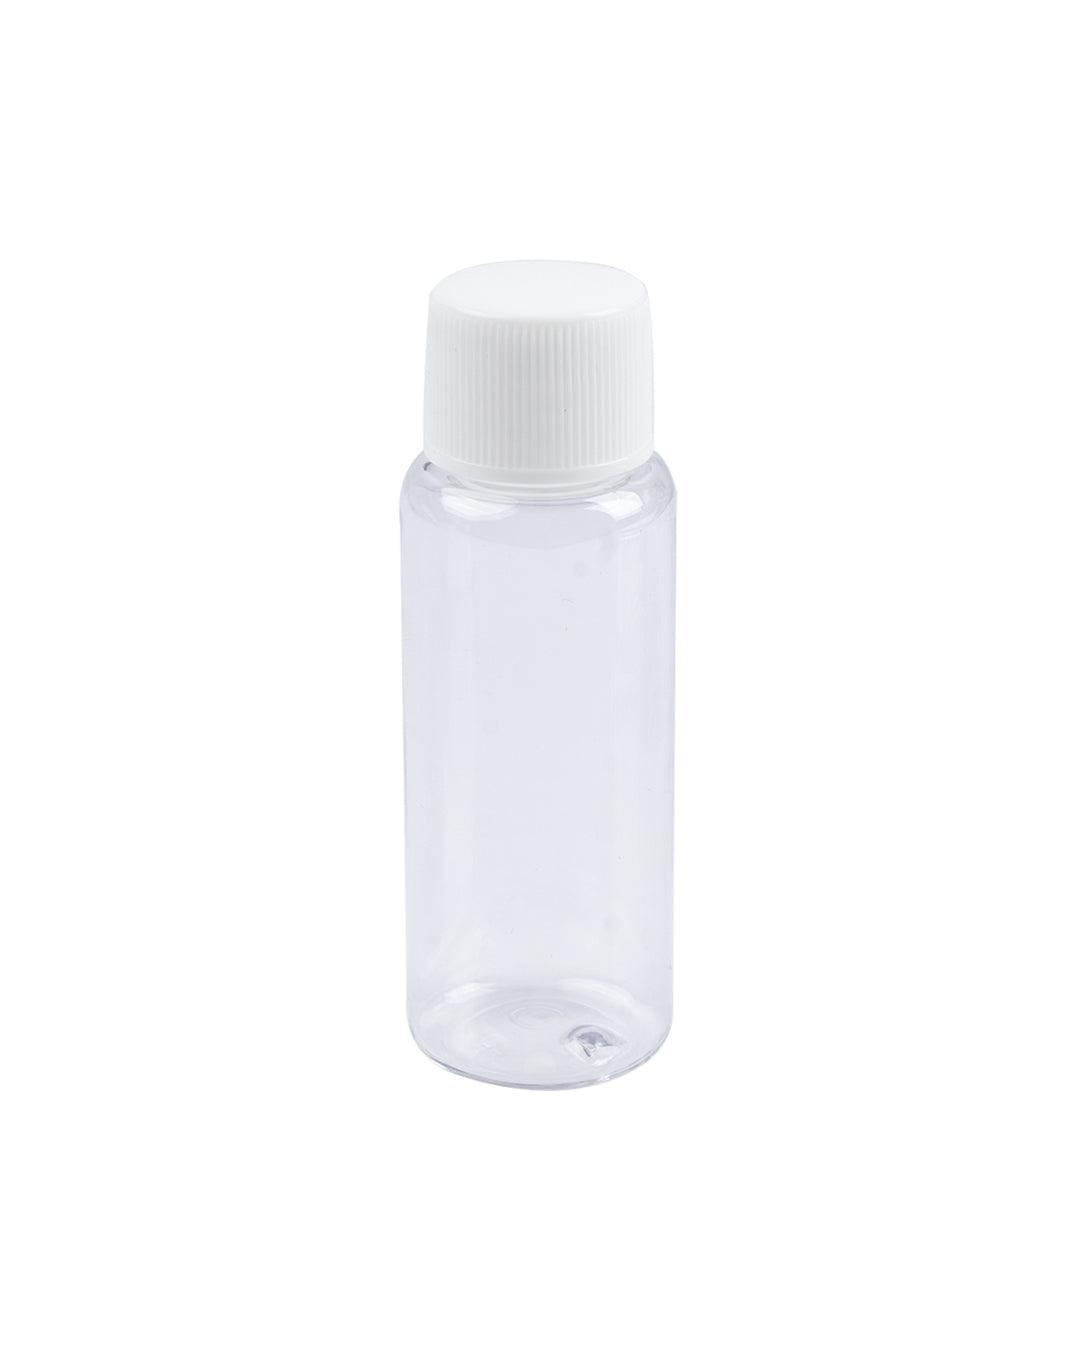 Travel Kit, Bottles & Dispensers, Transparent, Plastic, Set of 3 - MARKET 99